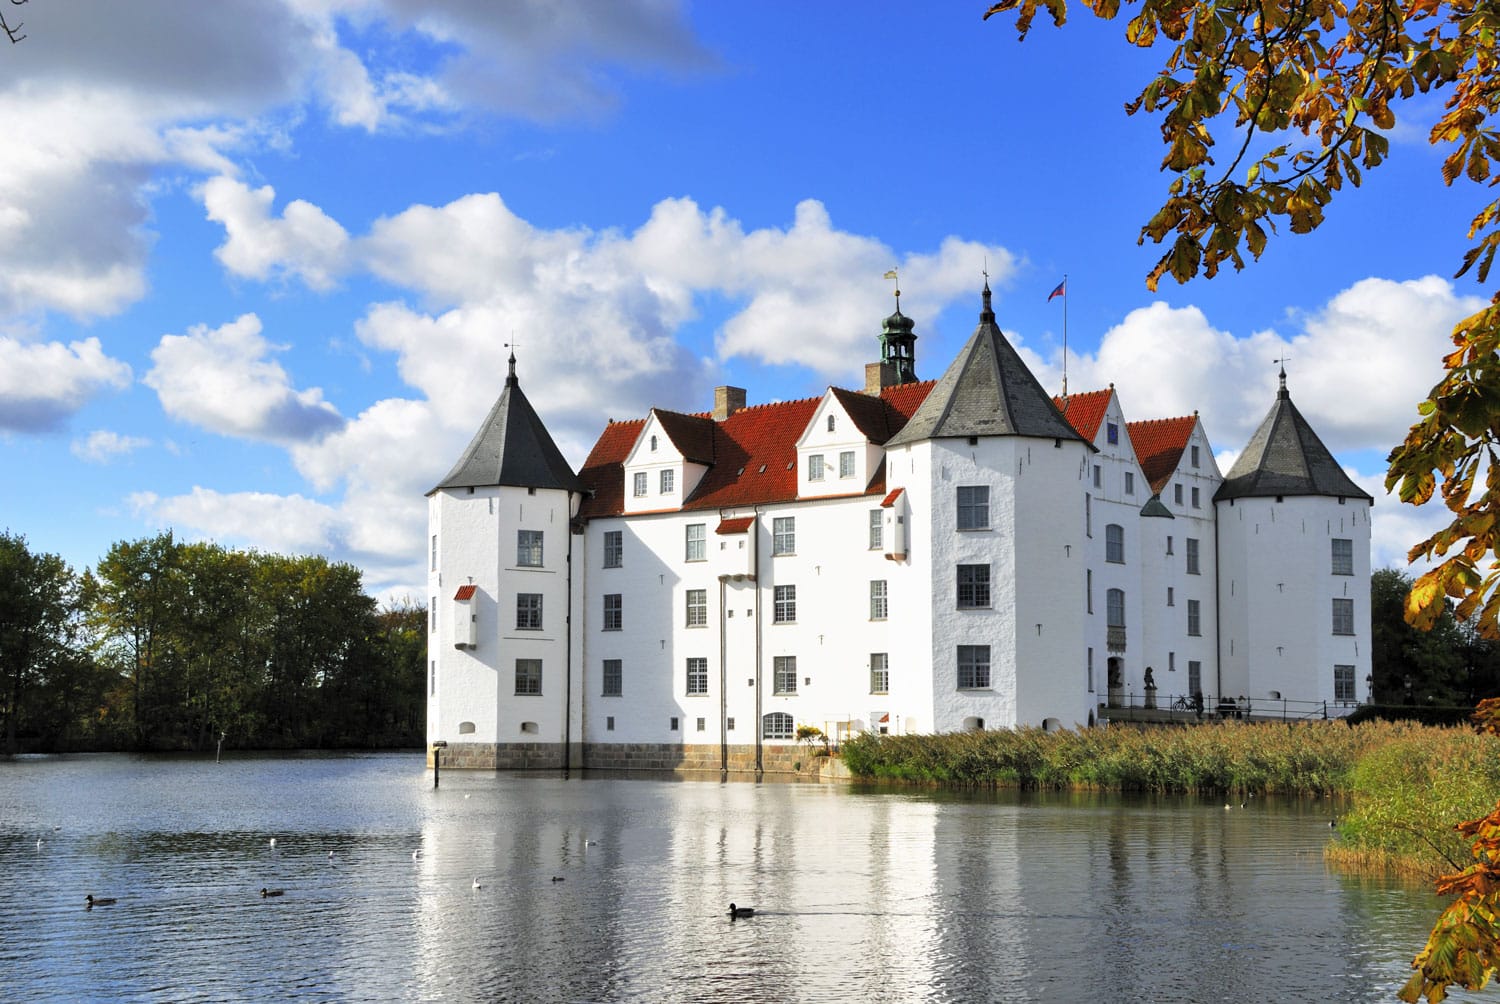 The Castle of Glucksburg in Flensburg German